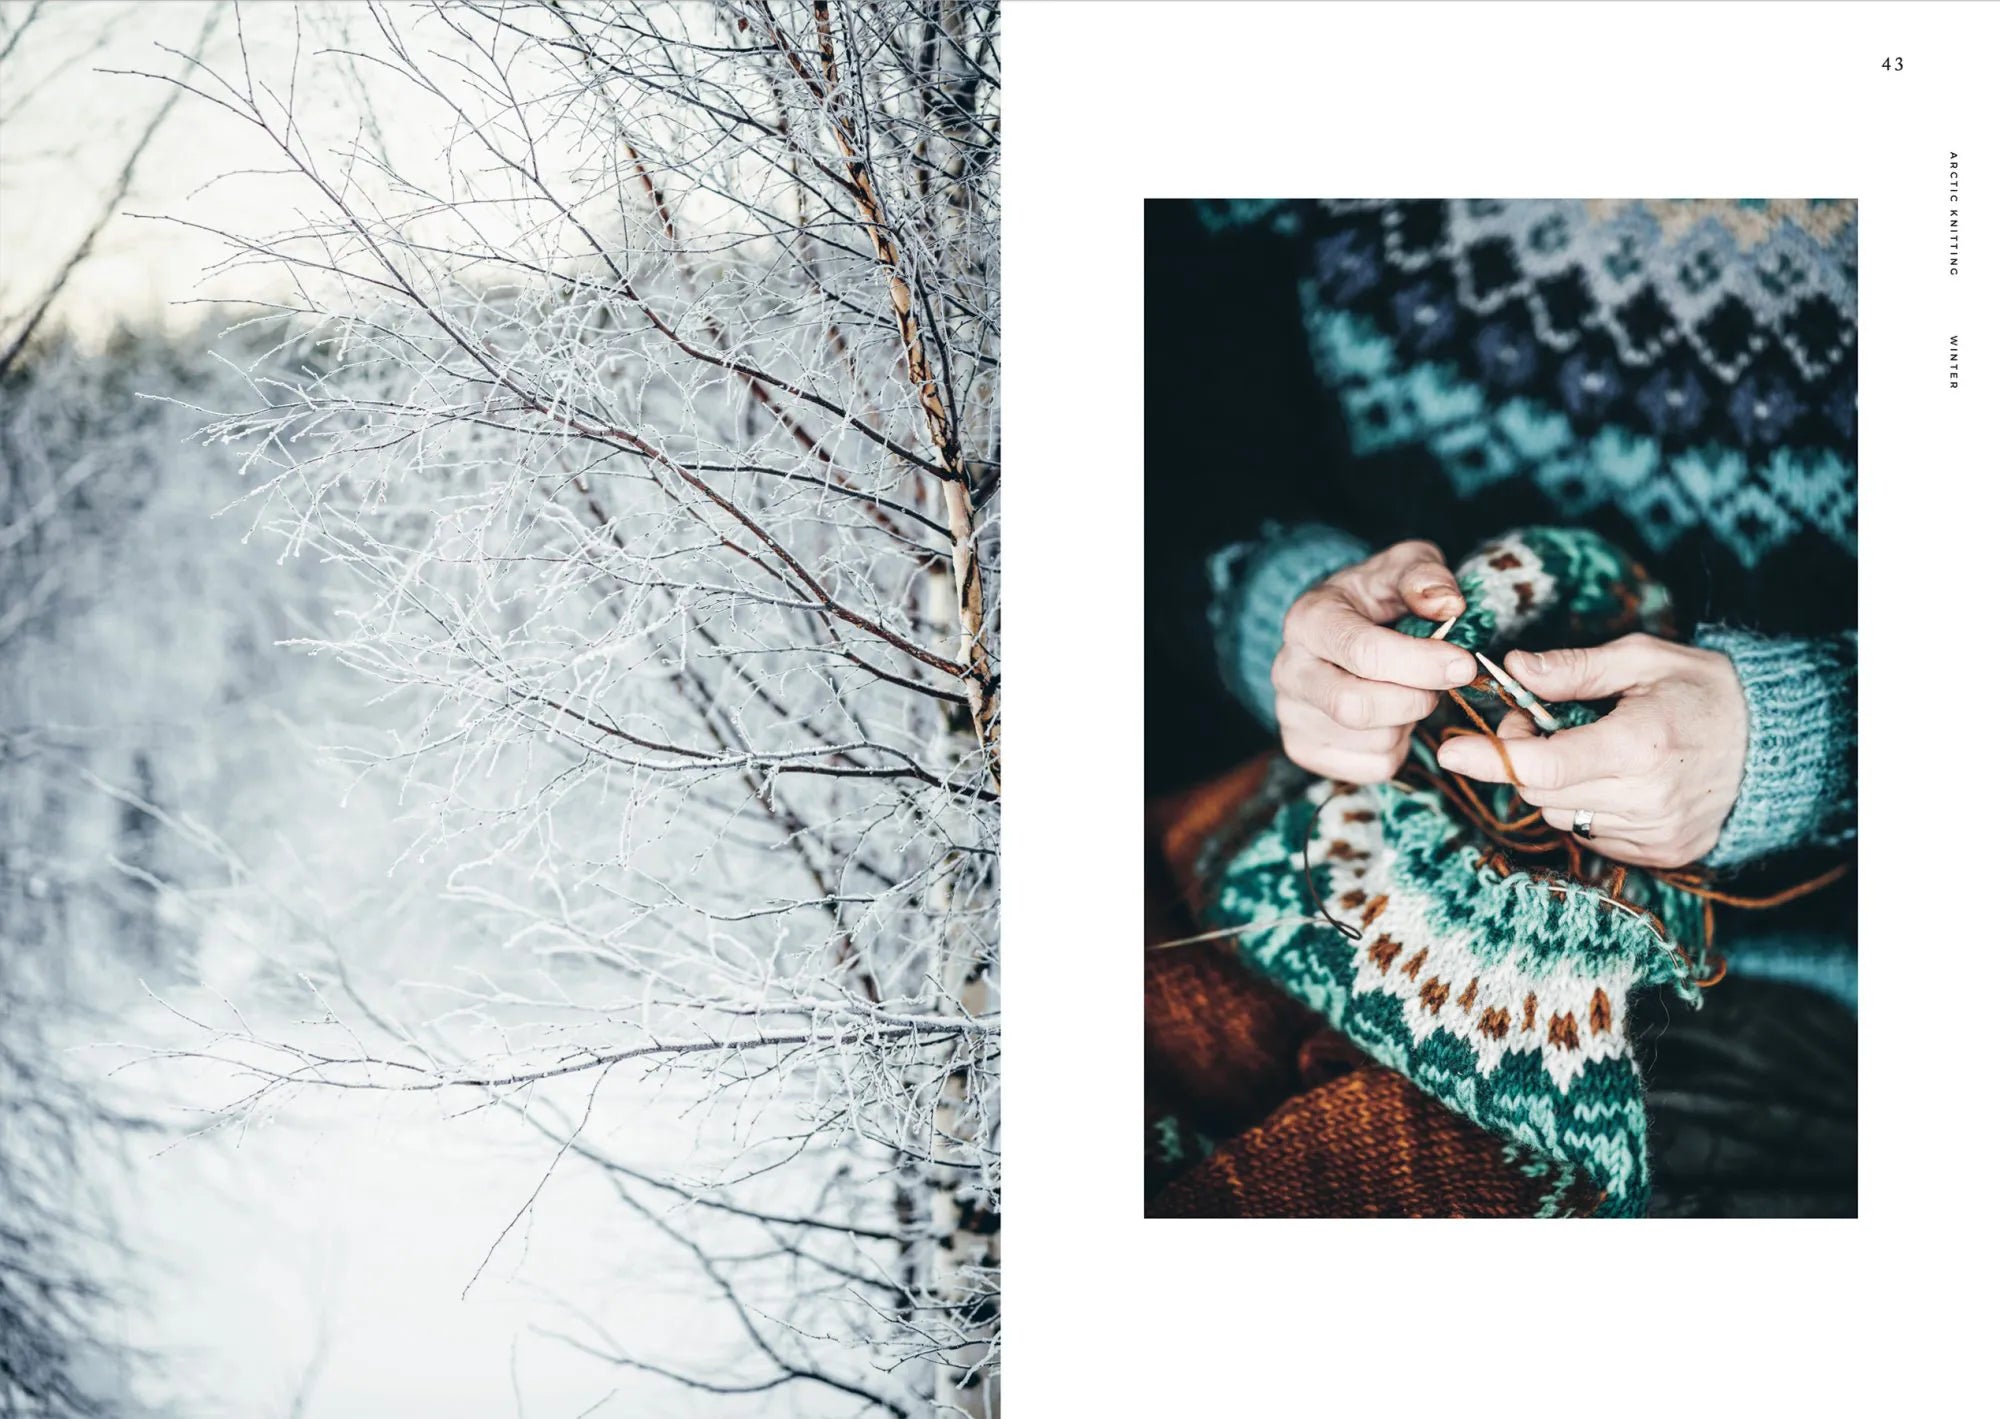 Arctic Knitting – The Magic of Nature and Colourwork Sari Nordlund